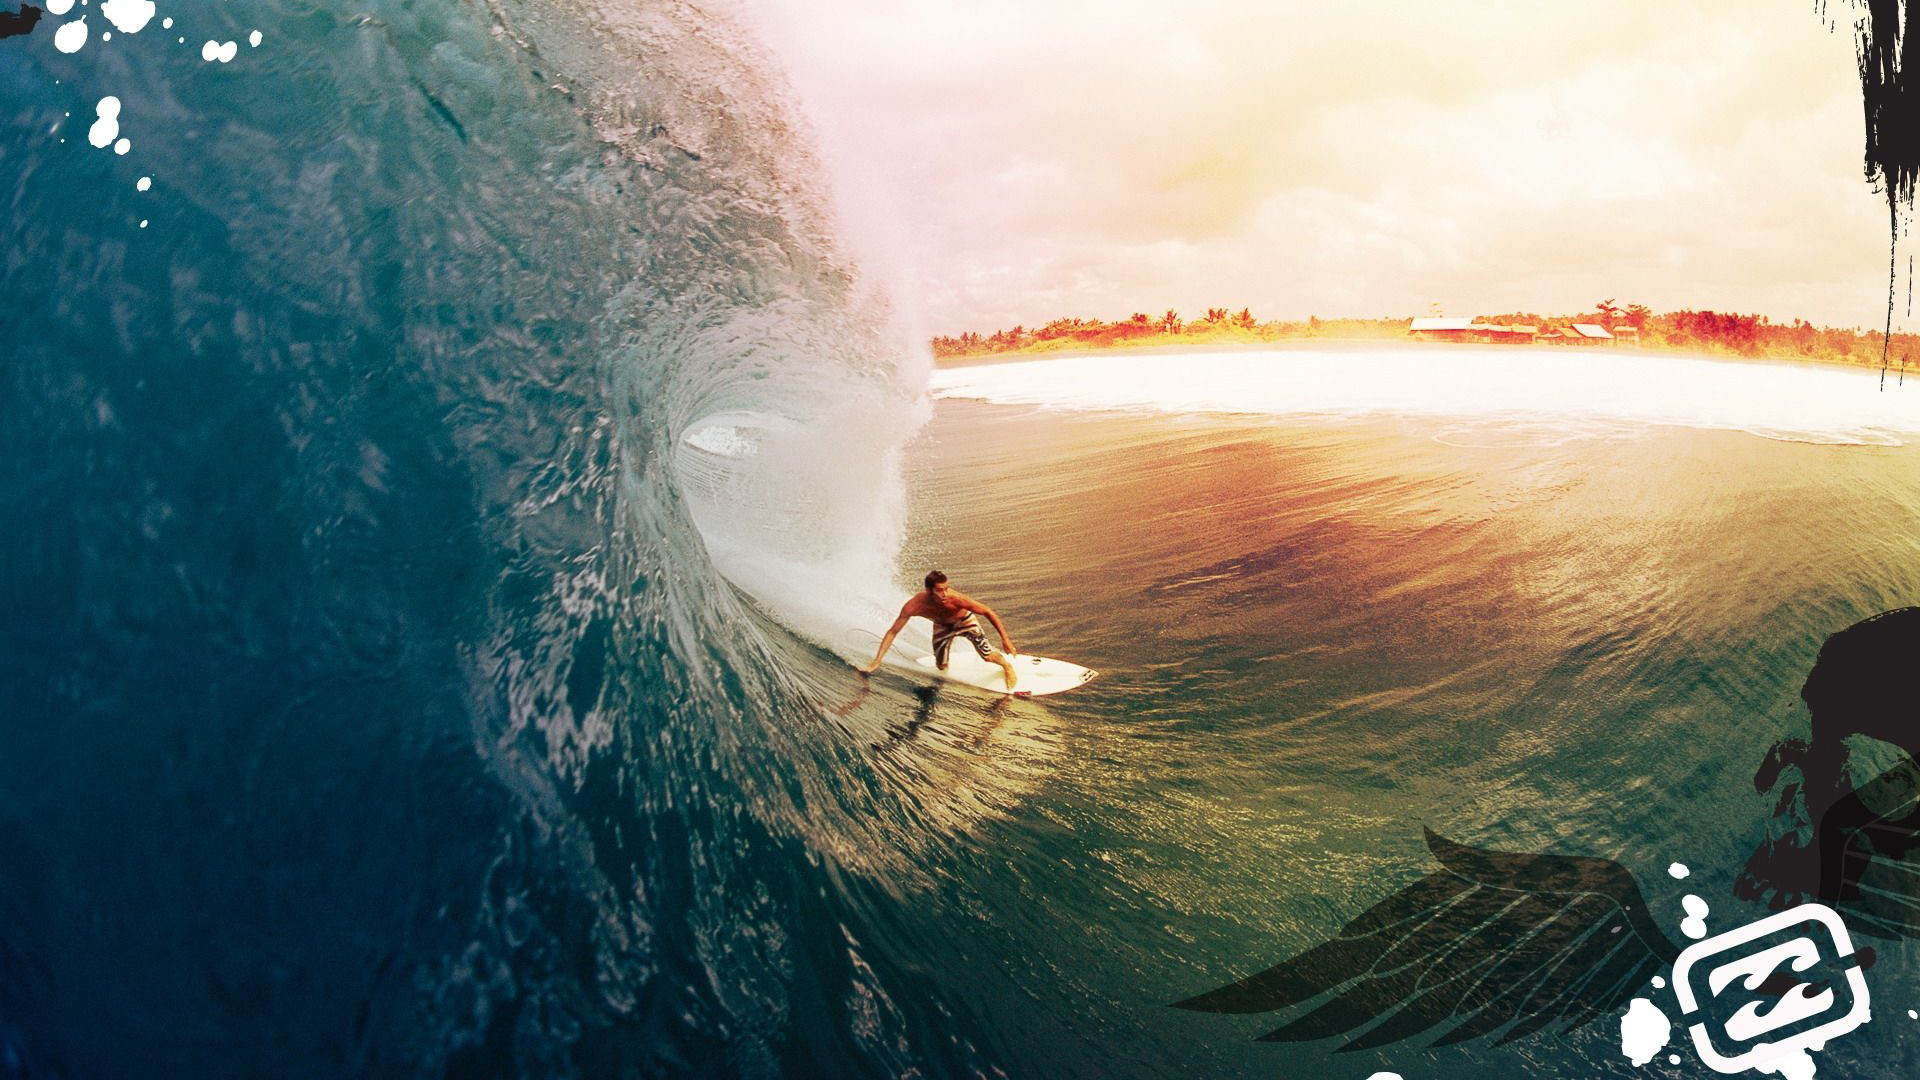 1920x1080 Surfer, surfing 1080p Full HD desktop background | Full HD Wallpapers .